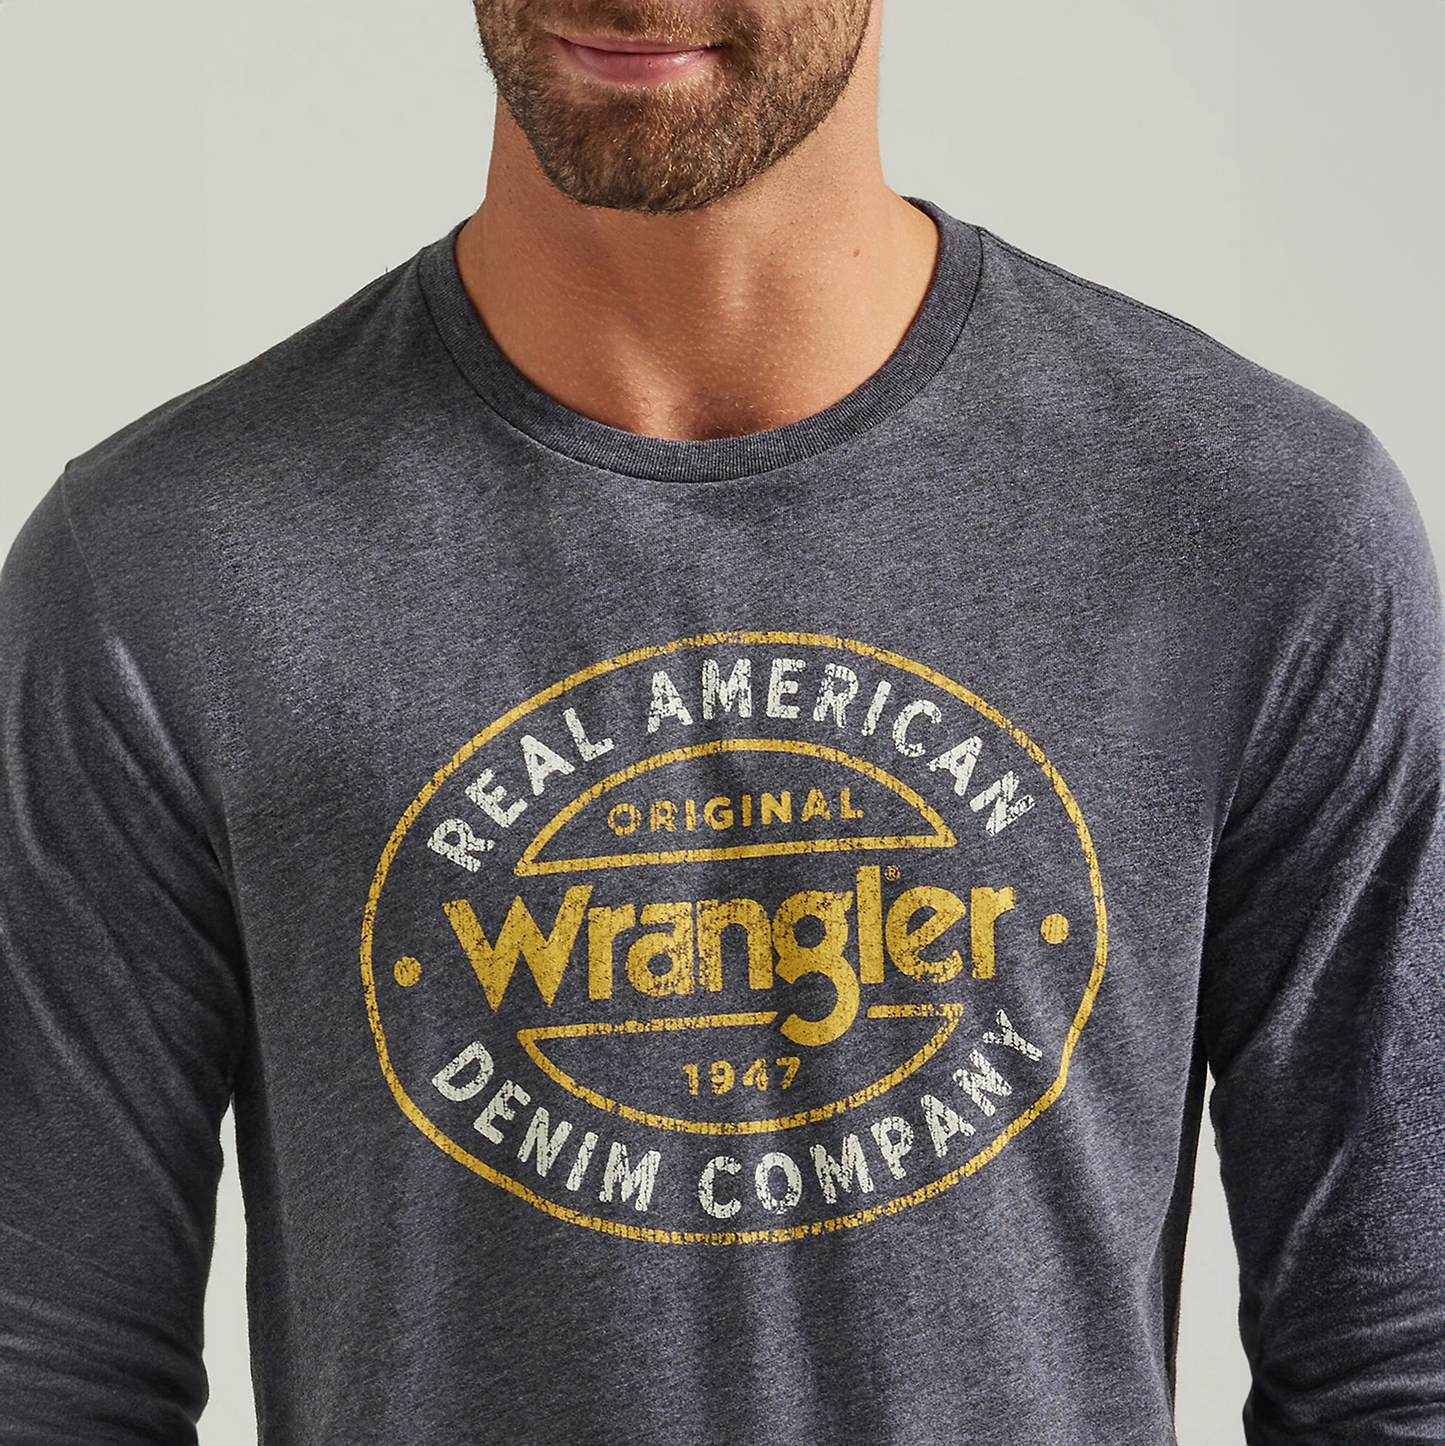 Wrangler Men's Long Sleeve Front Graphic T-Shirt - Caviar Heather